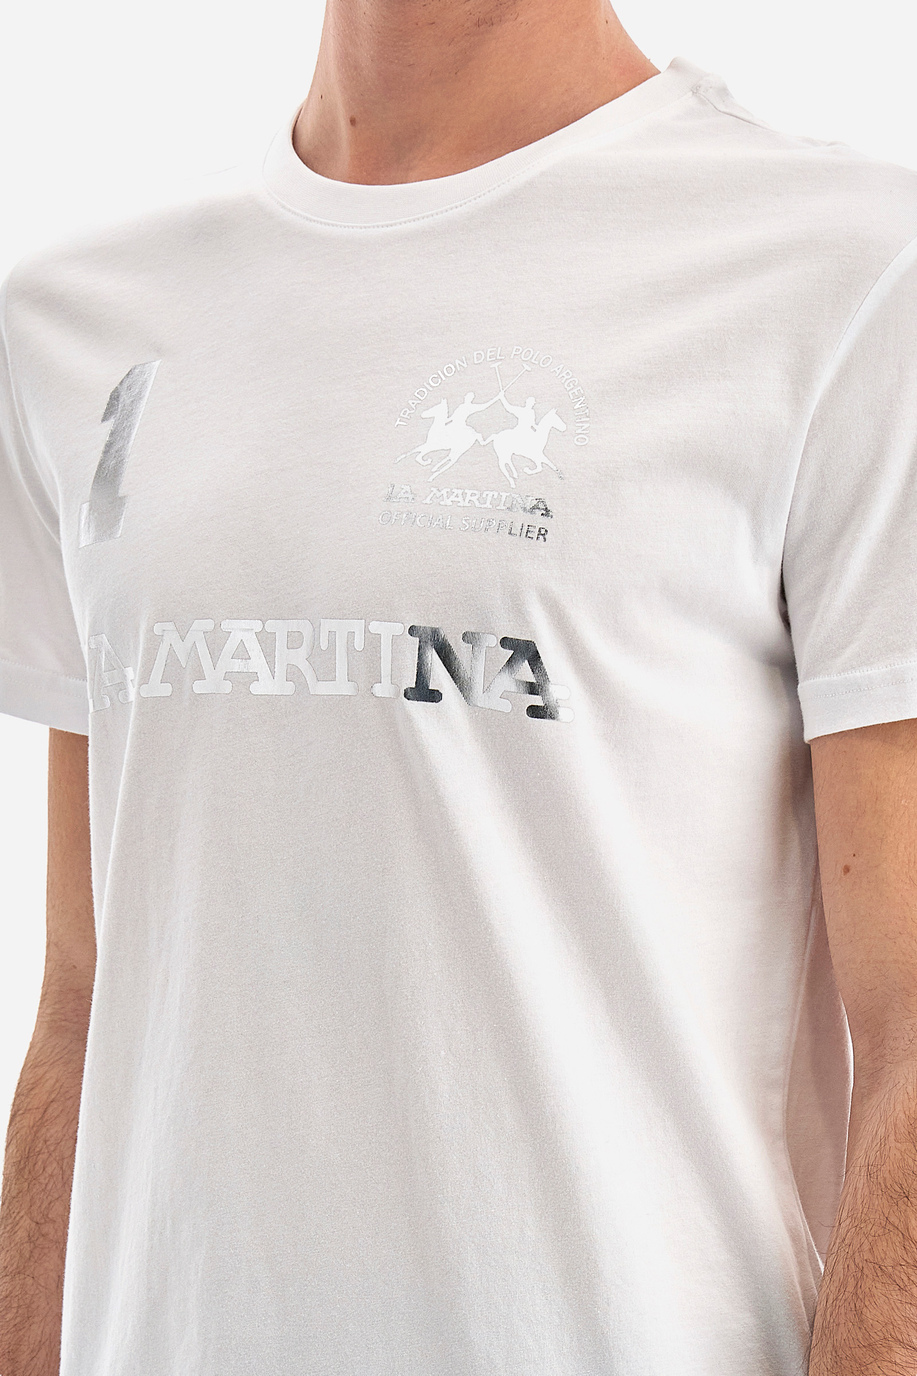 Herren -T -Shirt regular fit - Reichard - T-shirts | La Martina - Official Online Shop